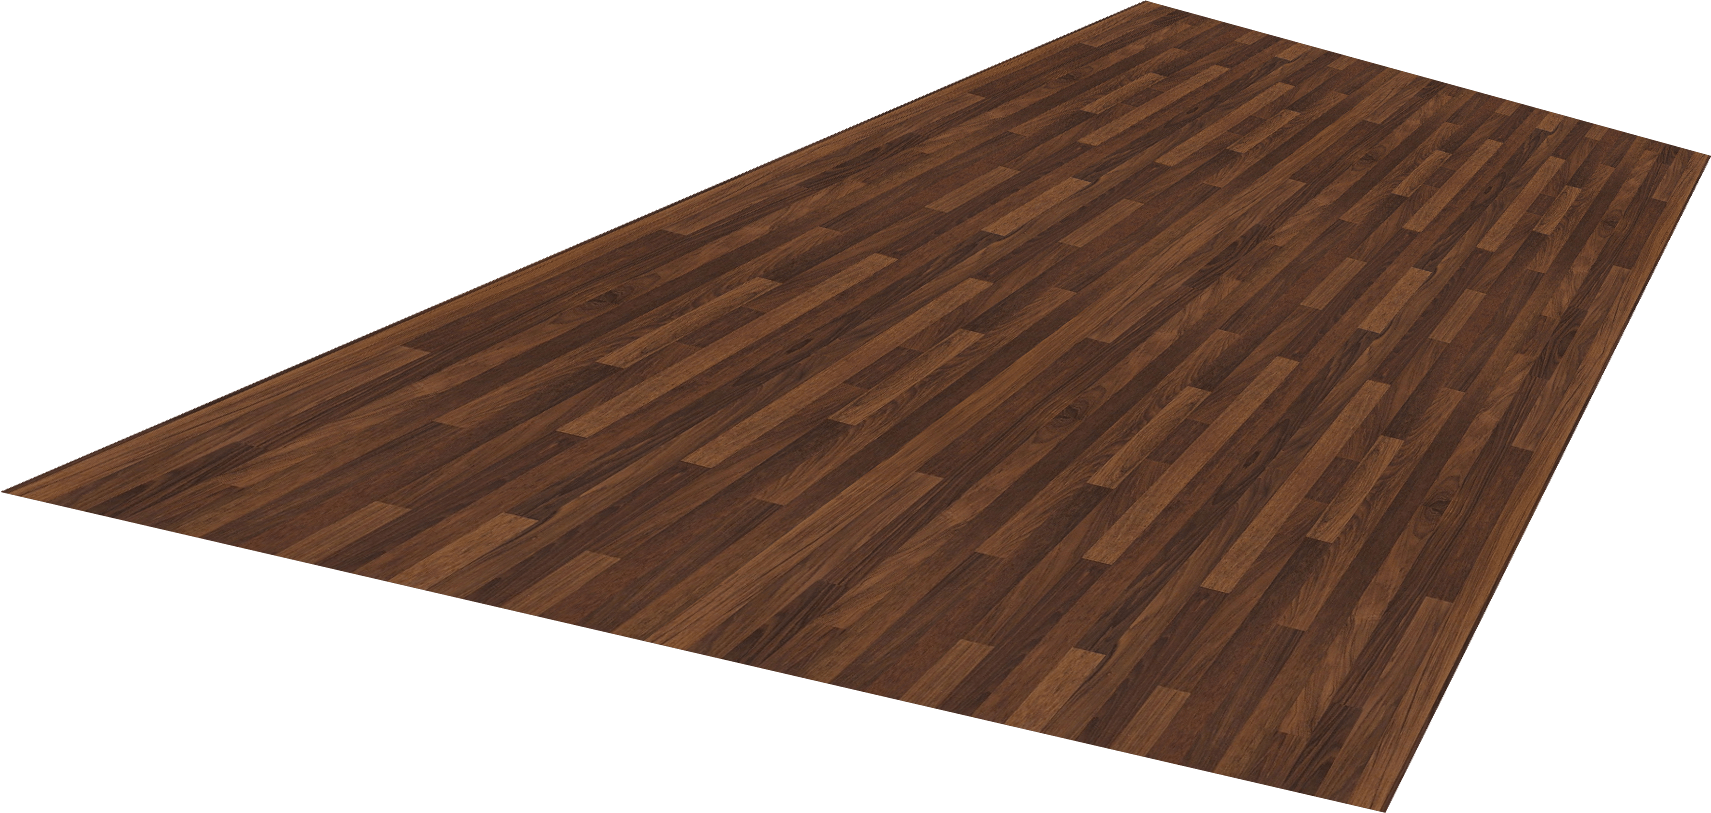 Floor with a dark wood design